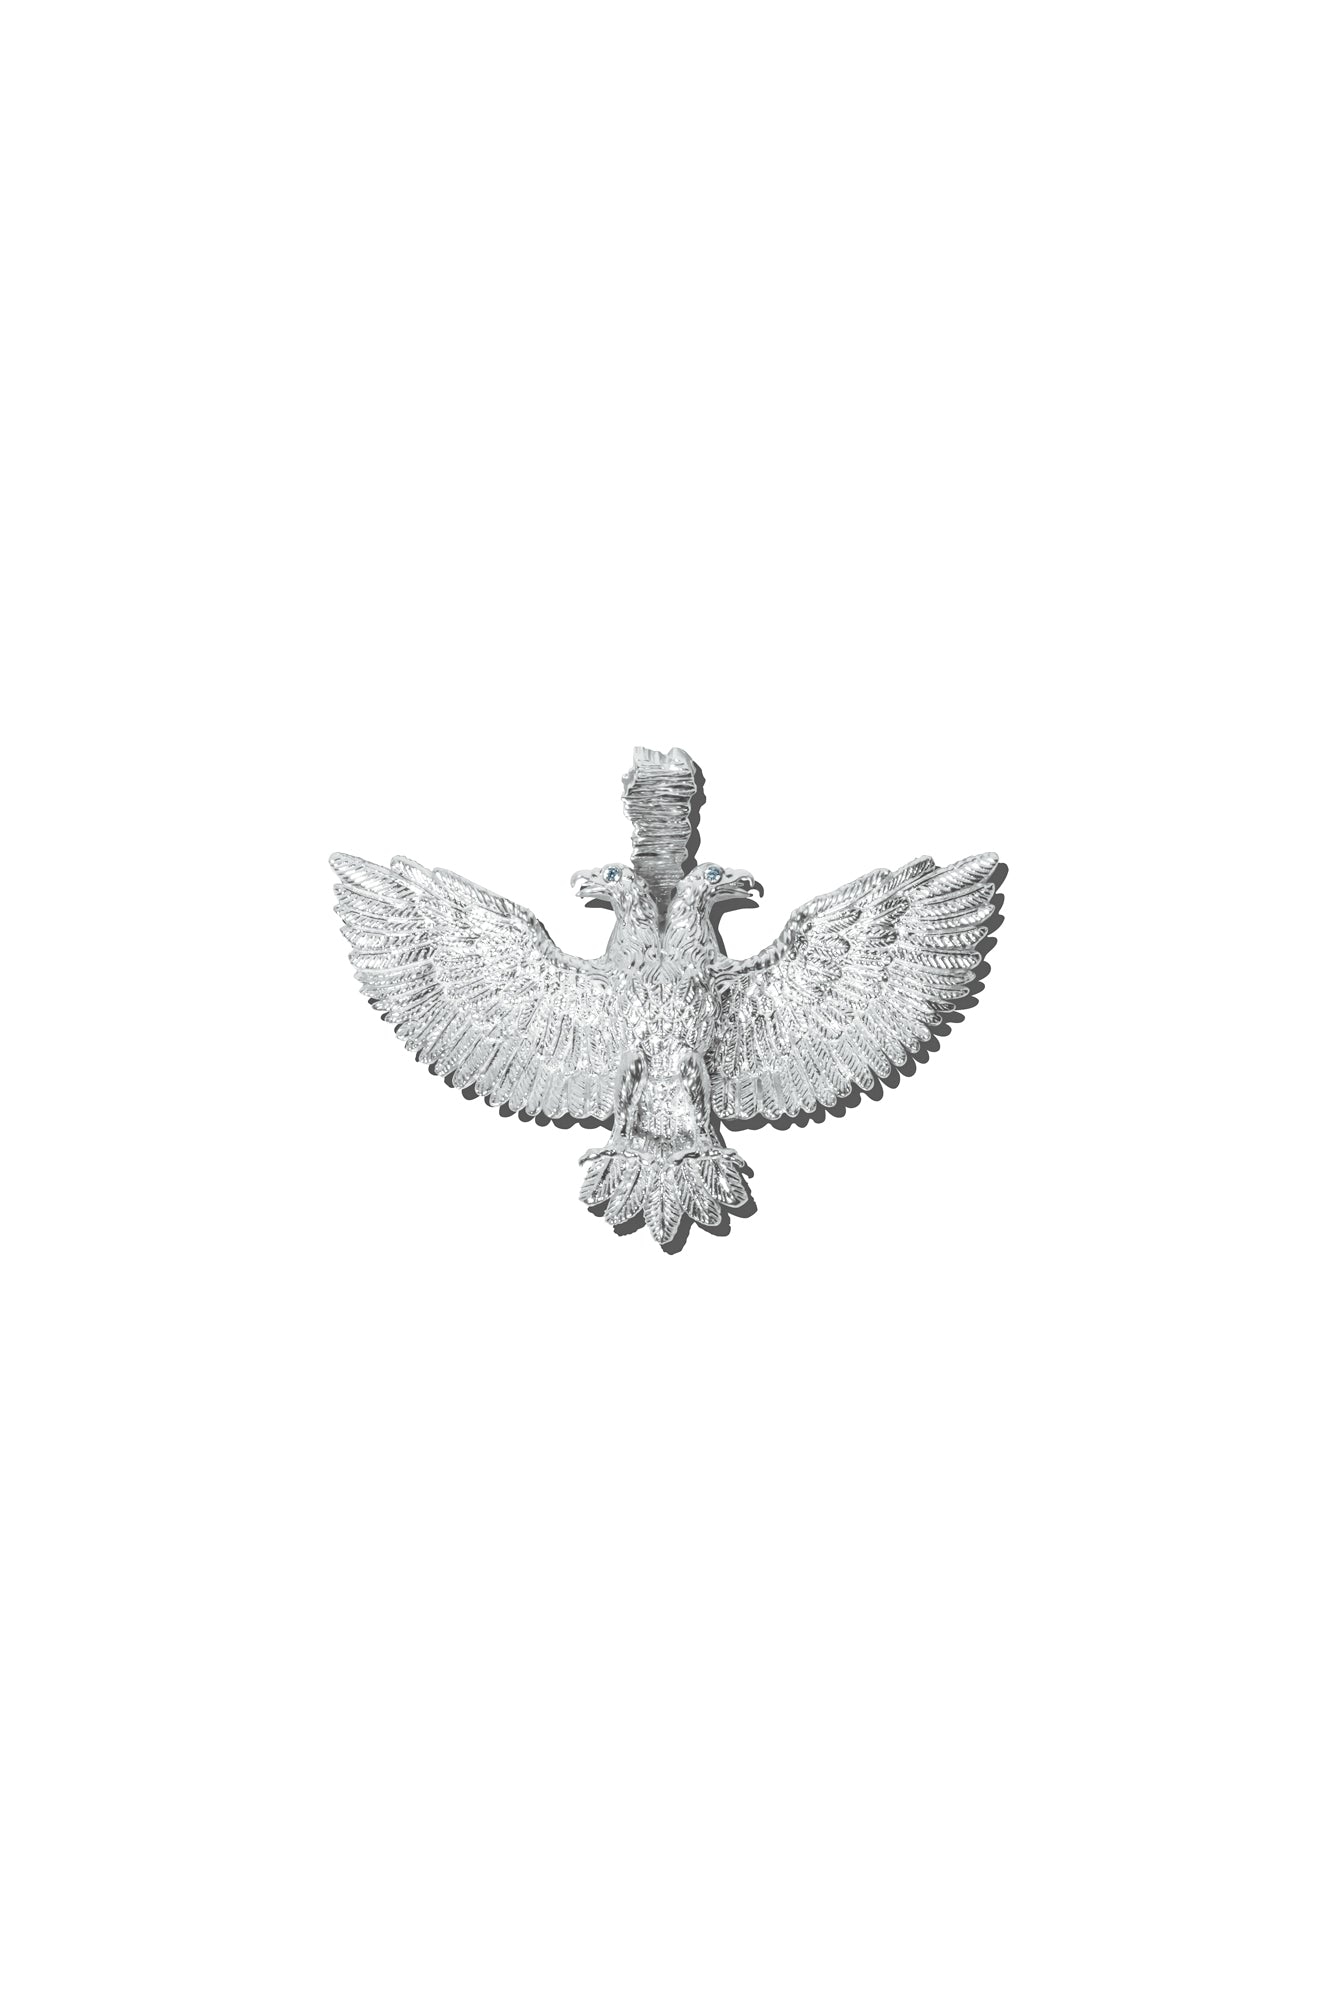 1st Republic Eagle | Silver | Small - Serma International